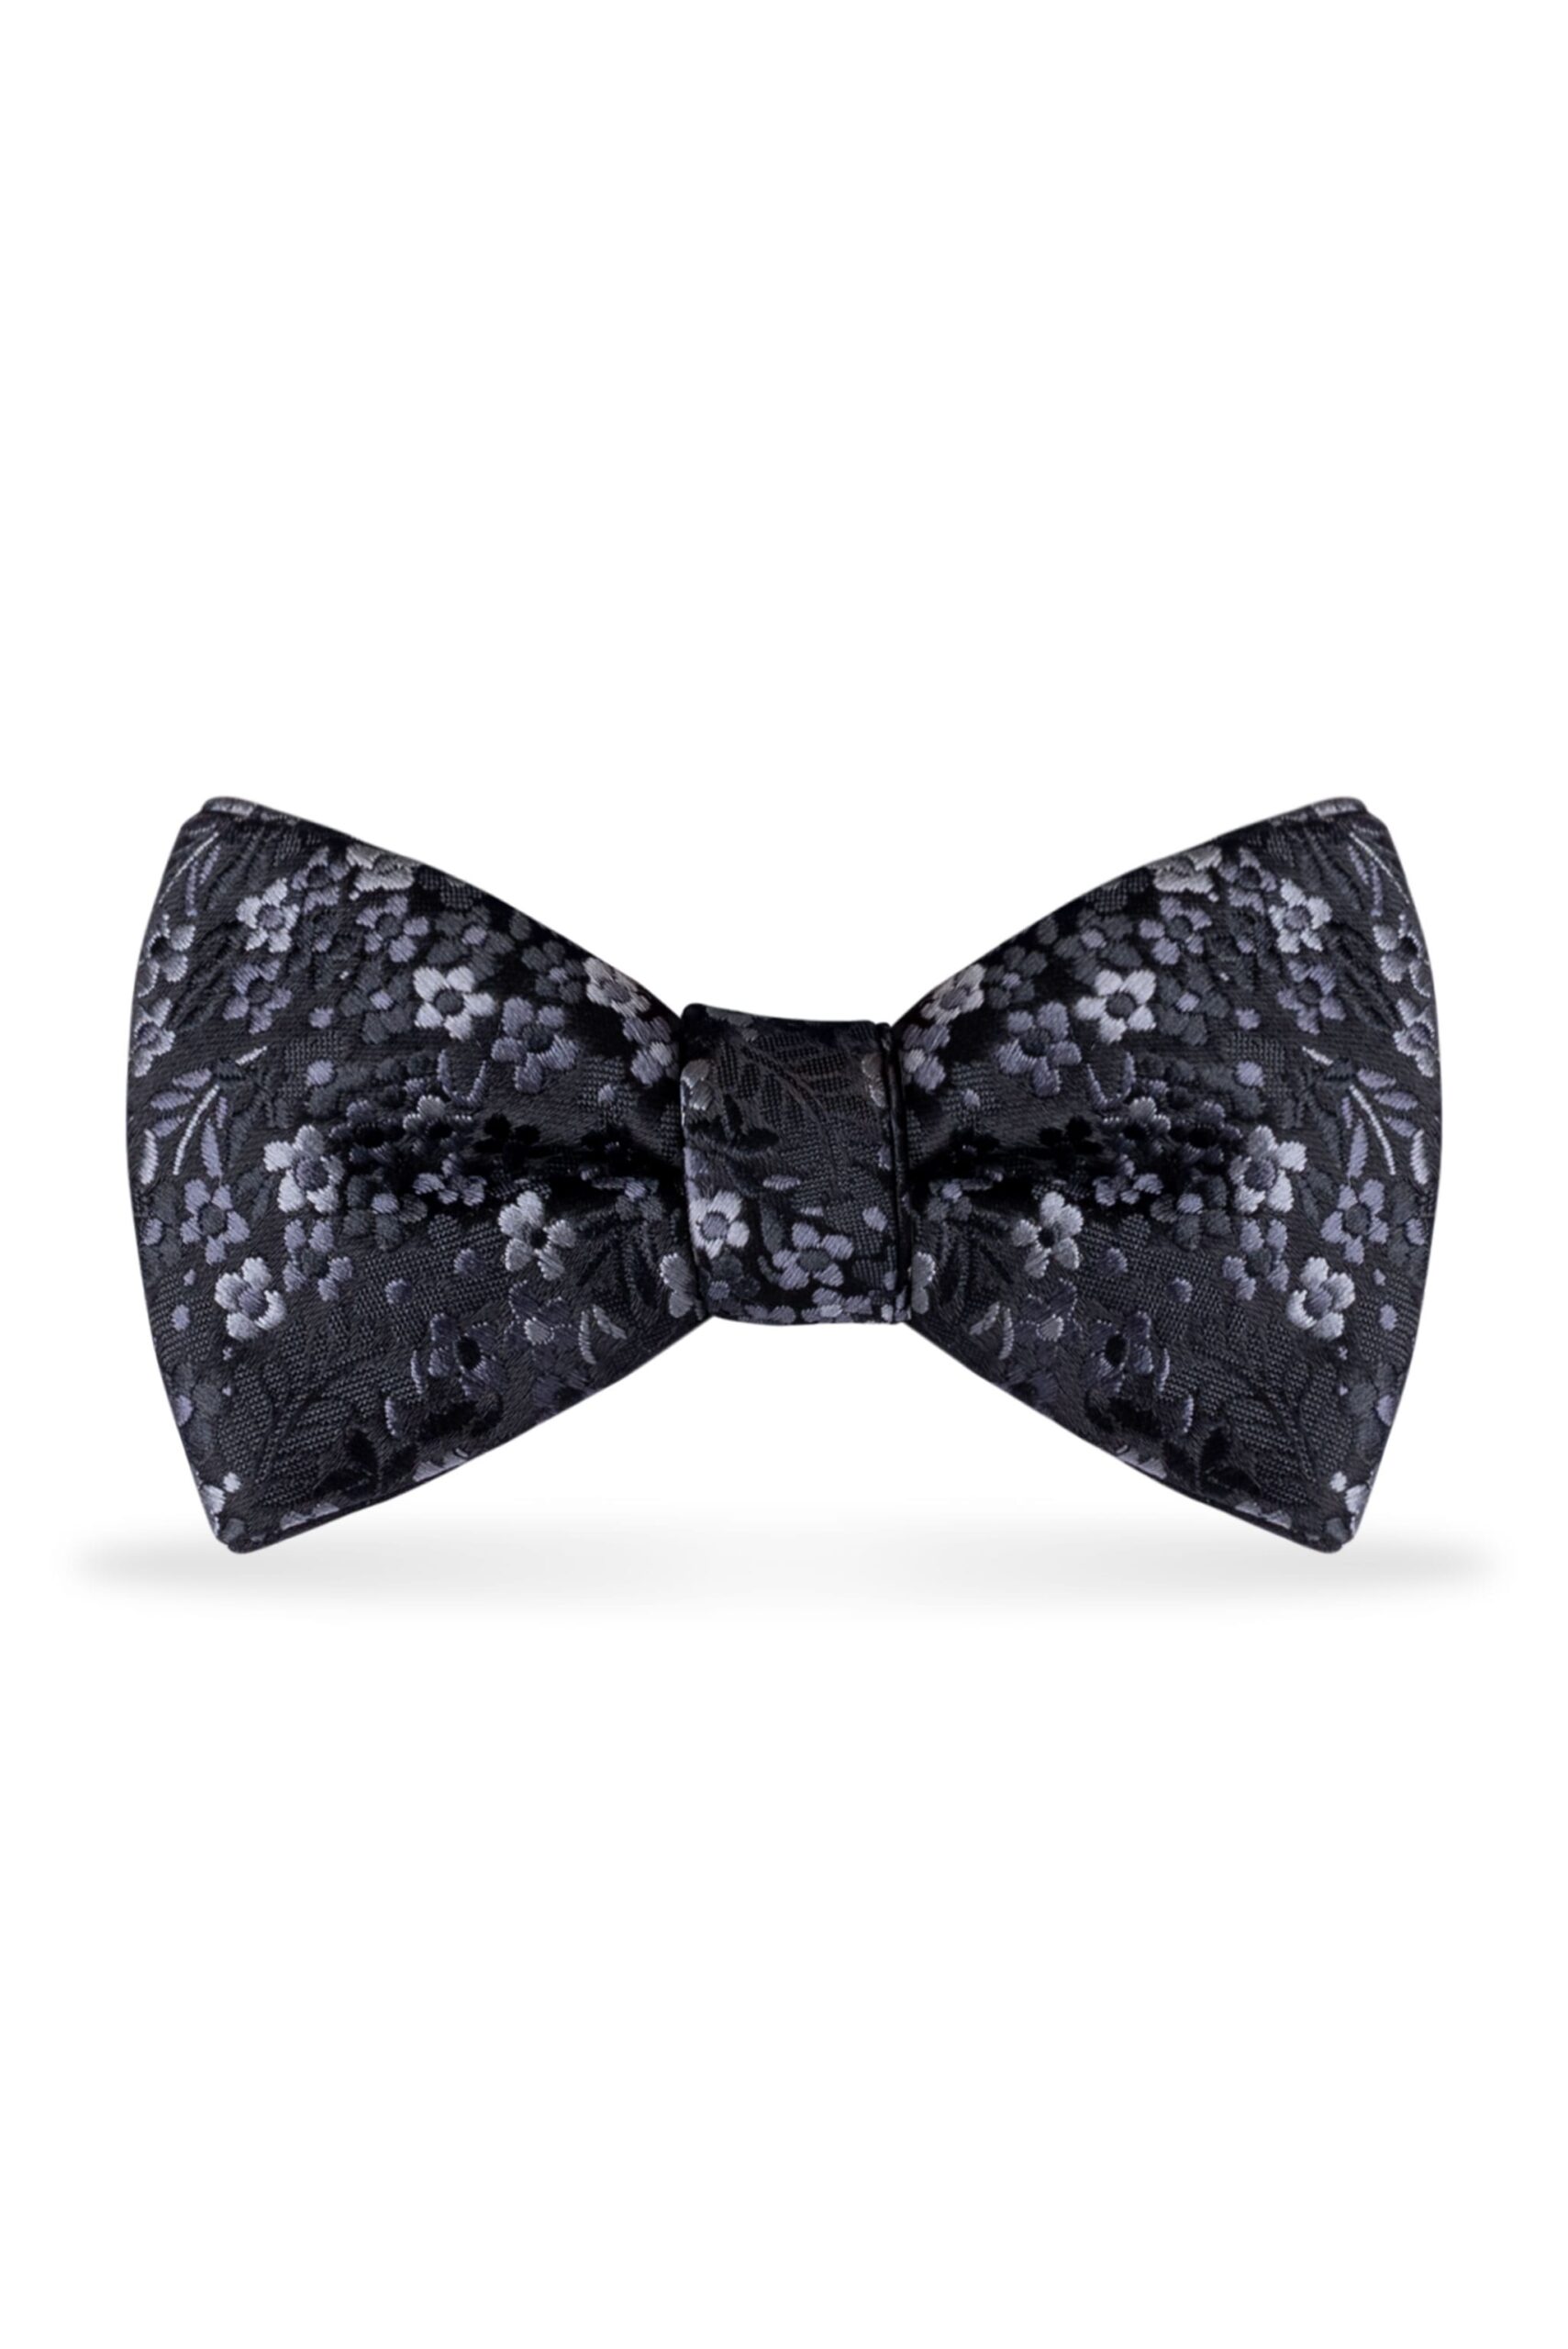 Floral Black Bow Tie 1